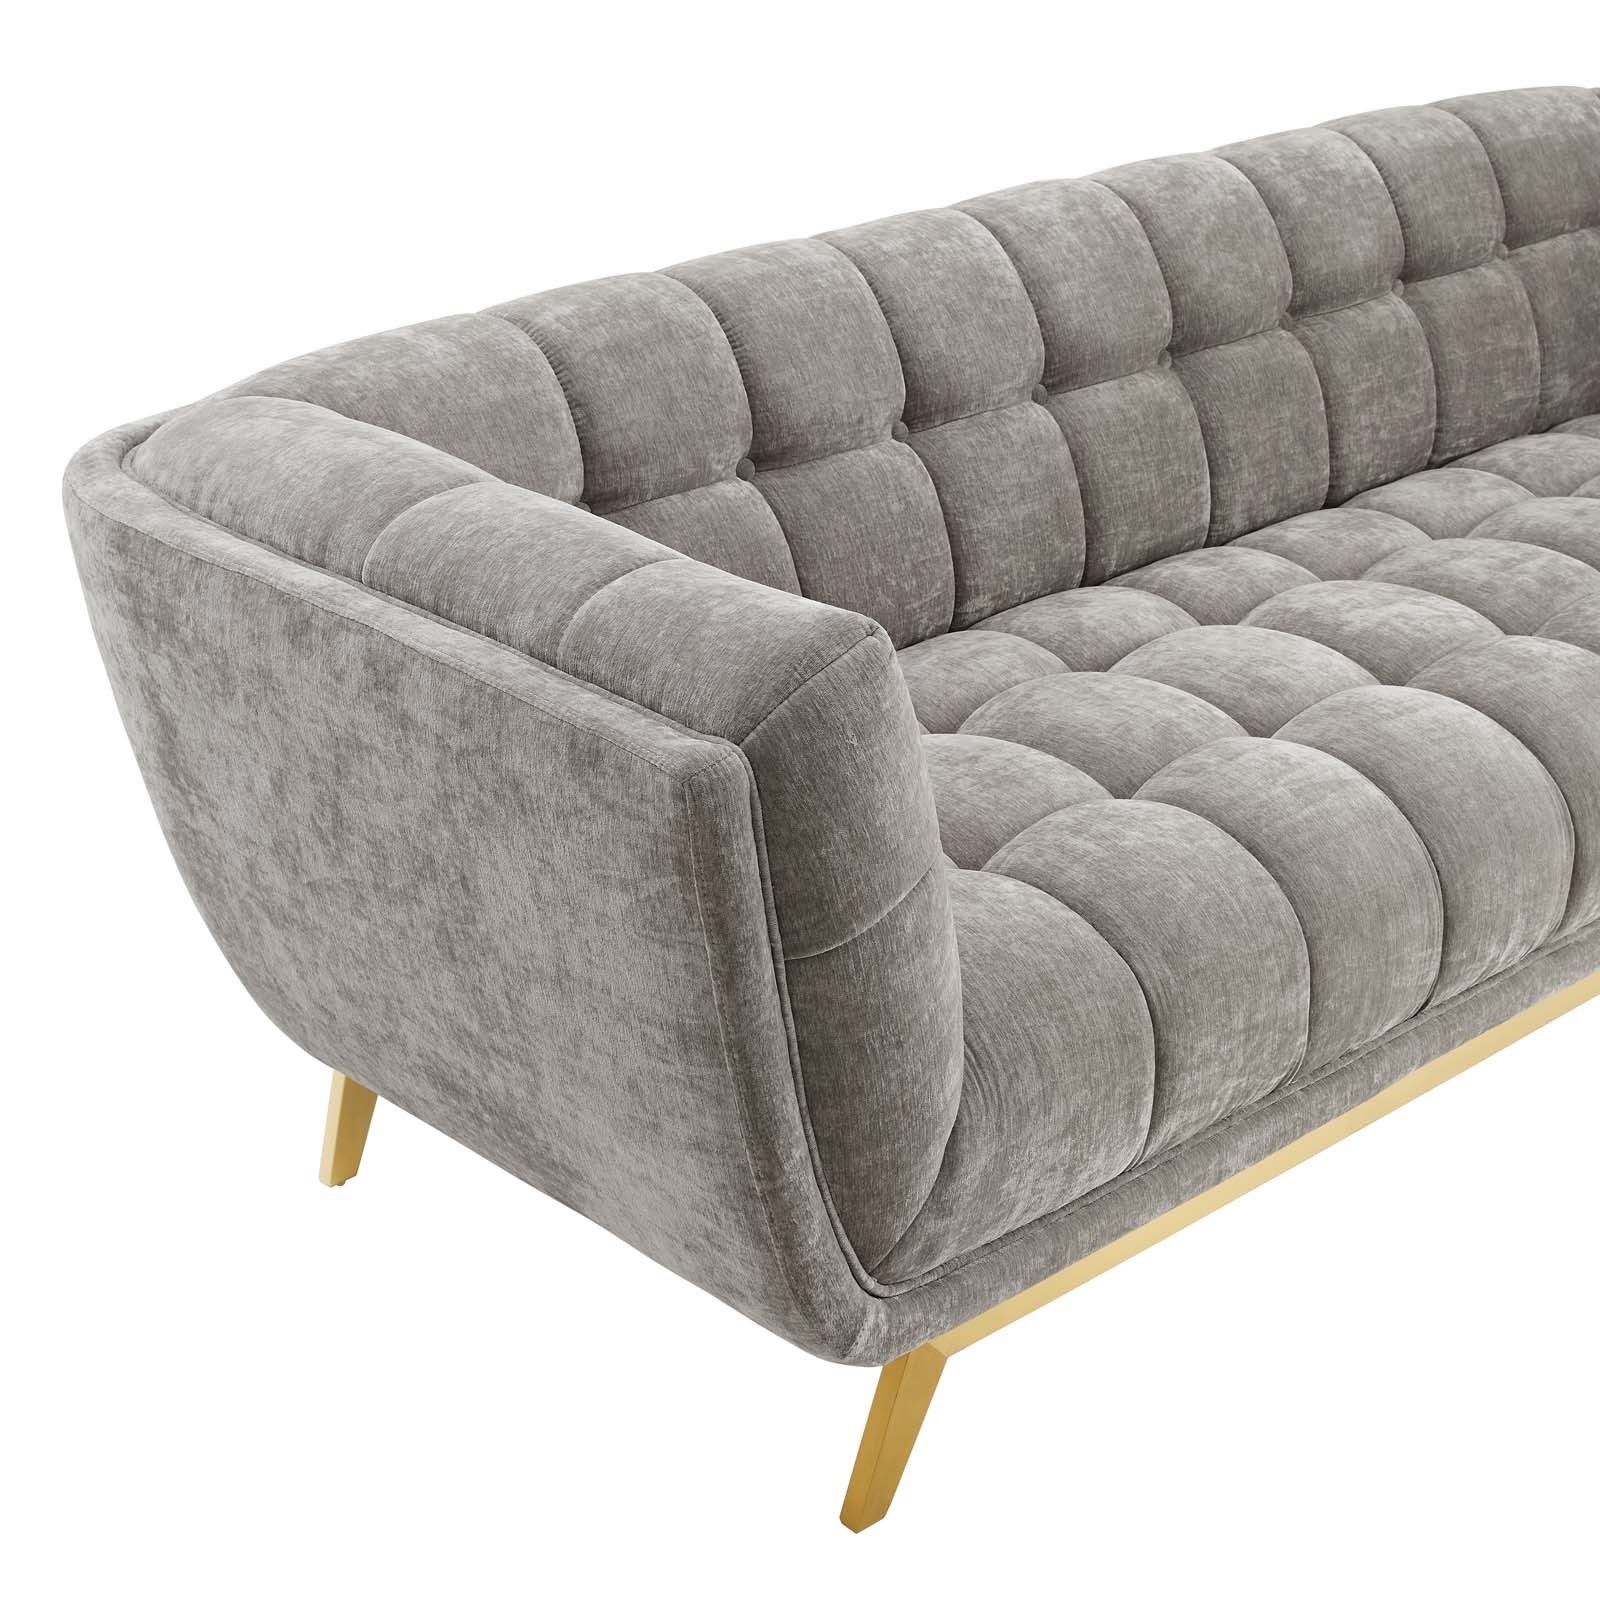 Bestow Crushed Performance Velvet Sofa in Light Gray - Hyme Furniture